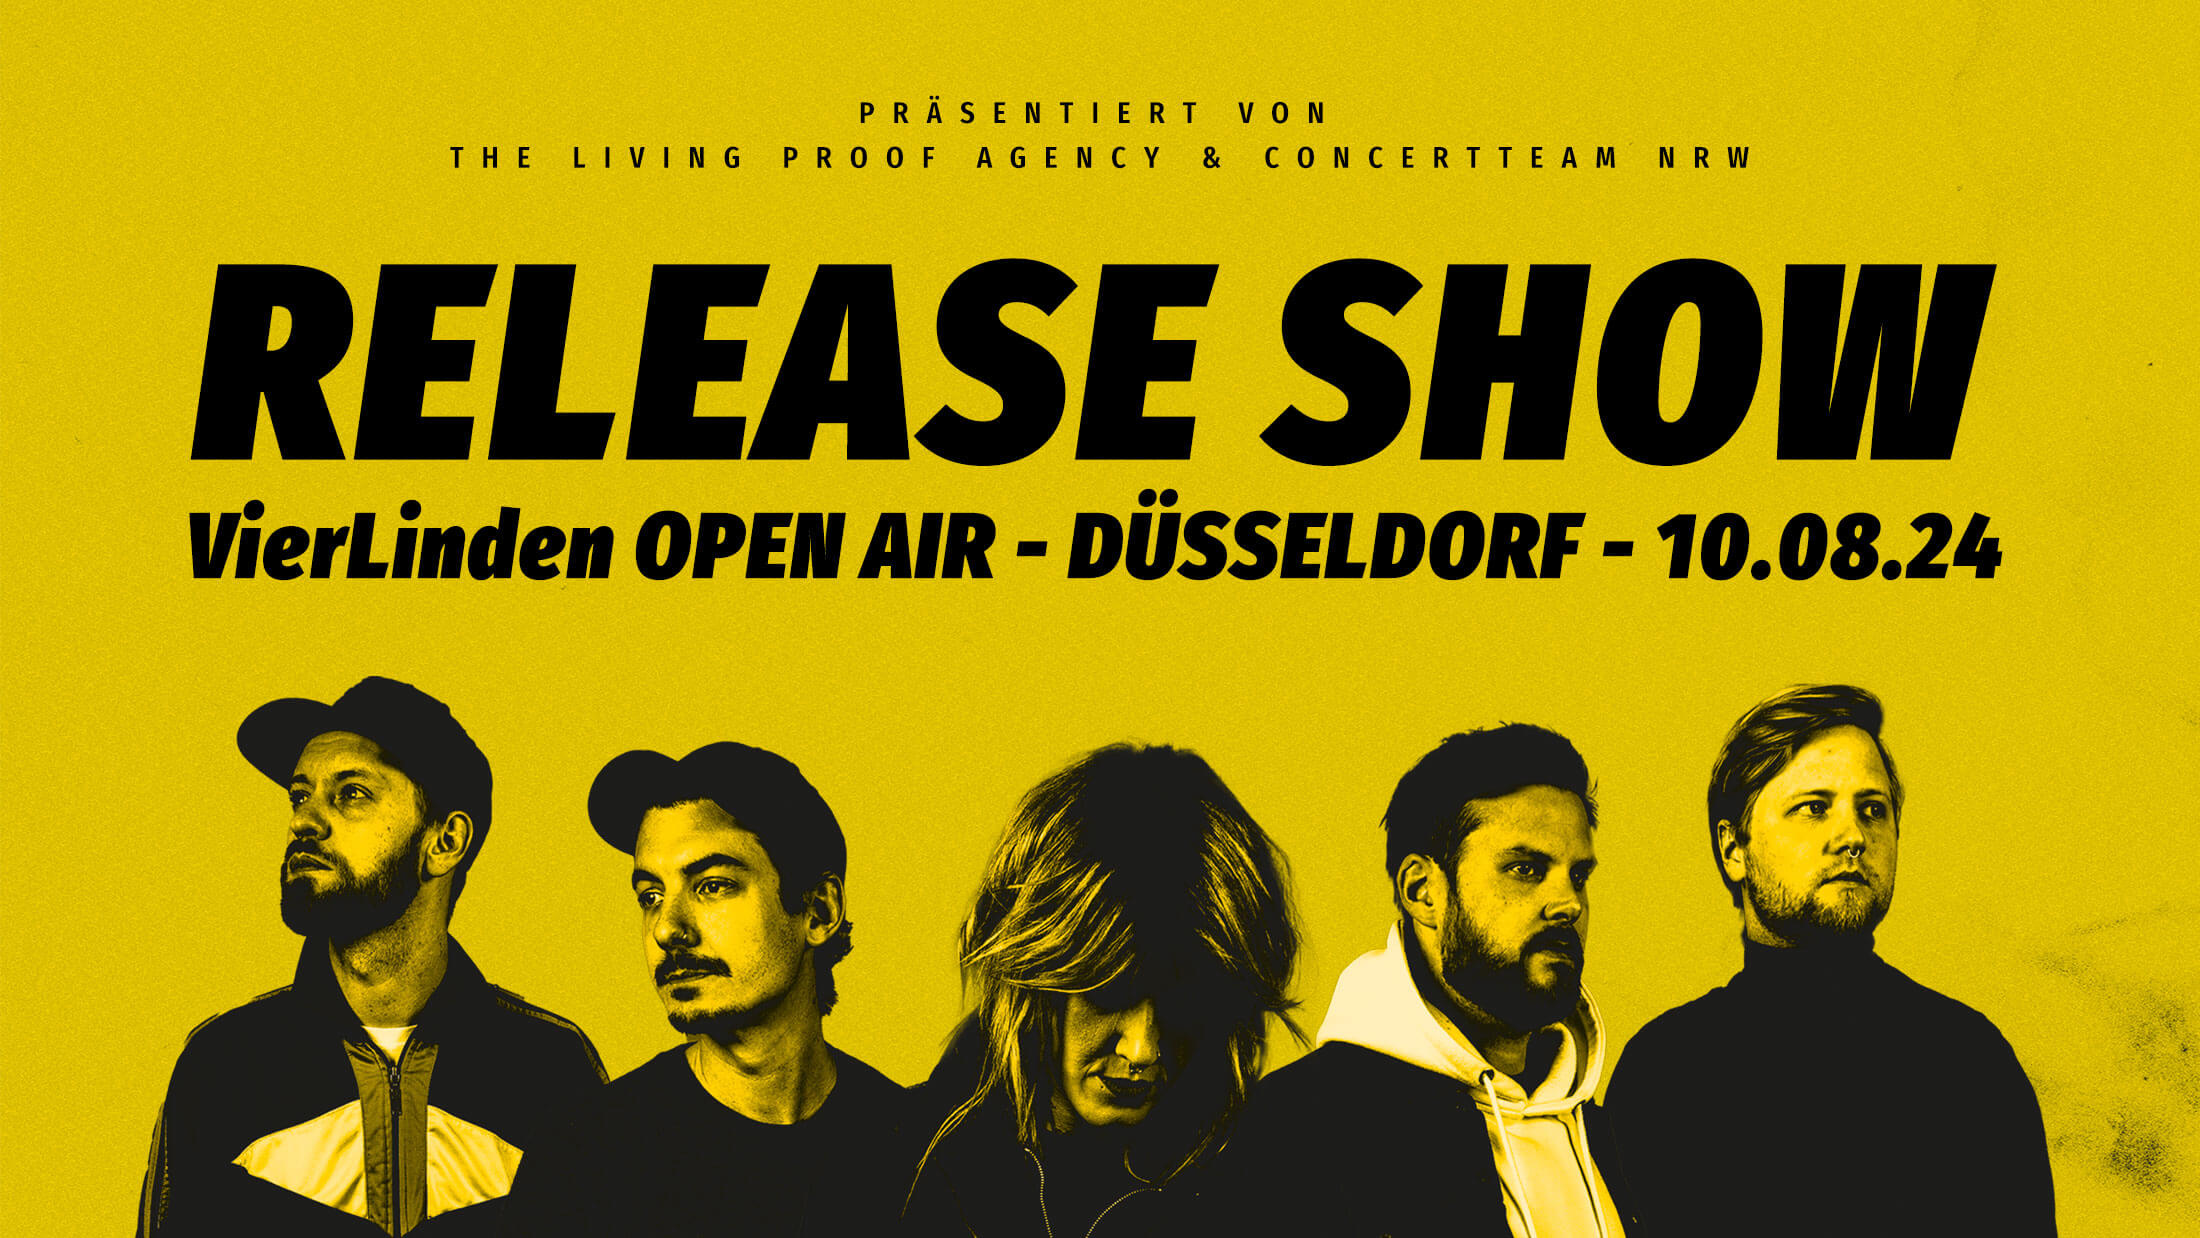 Kopfecho Release-Show Open-Air